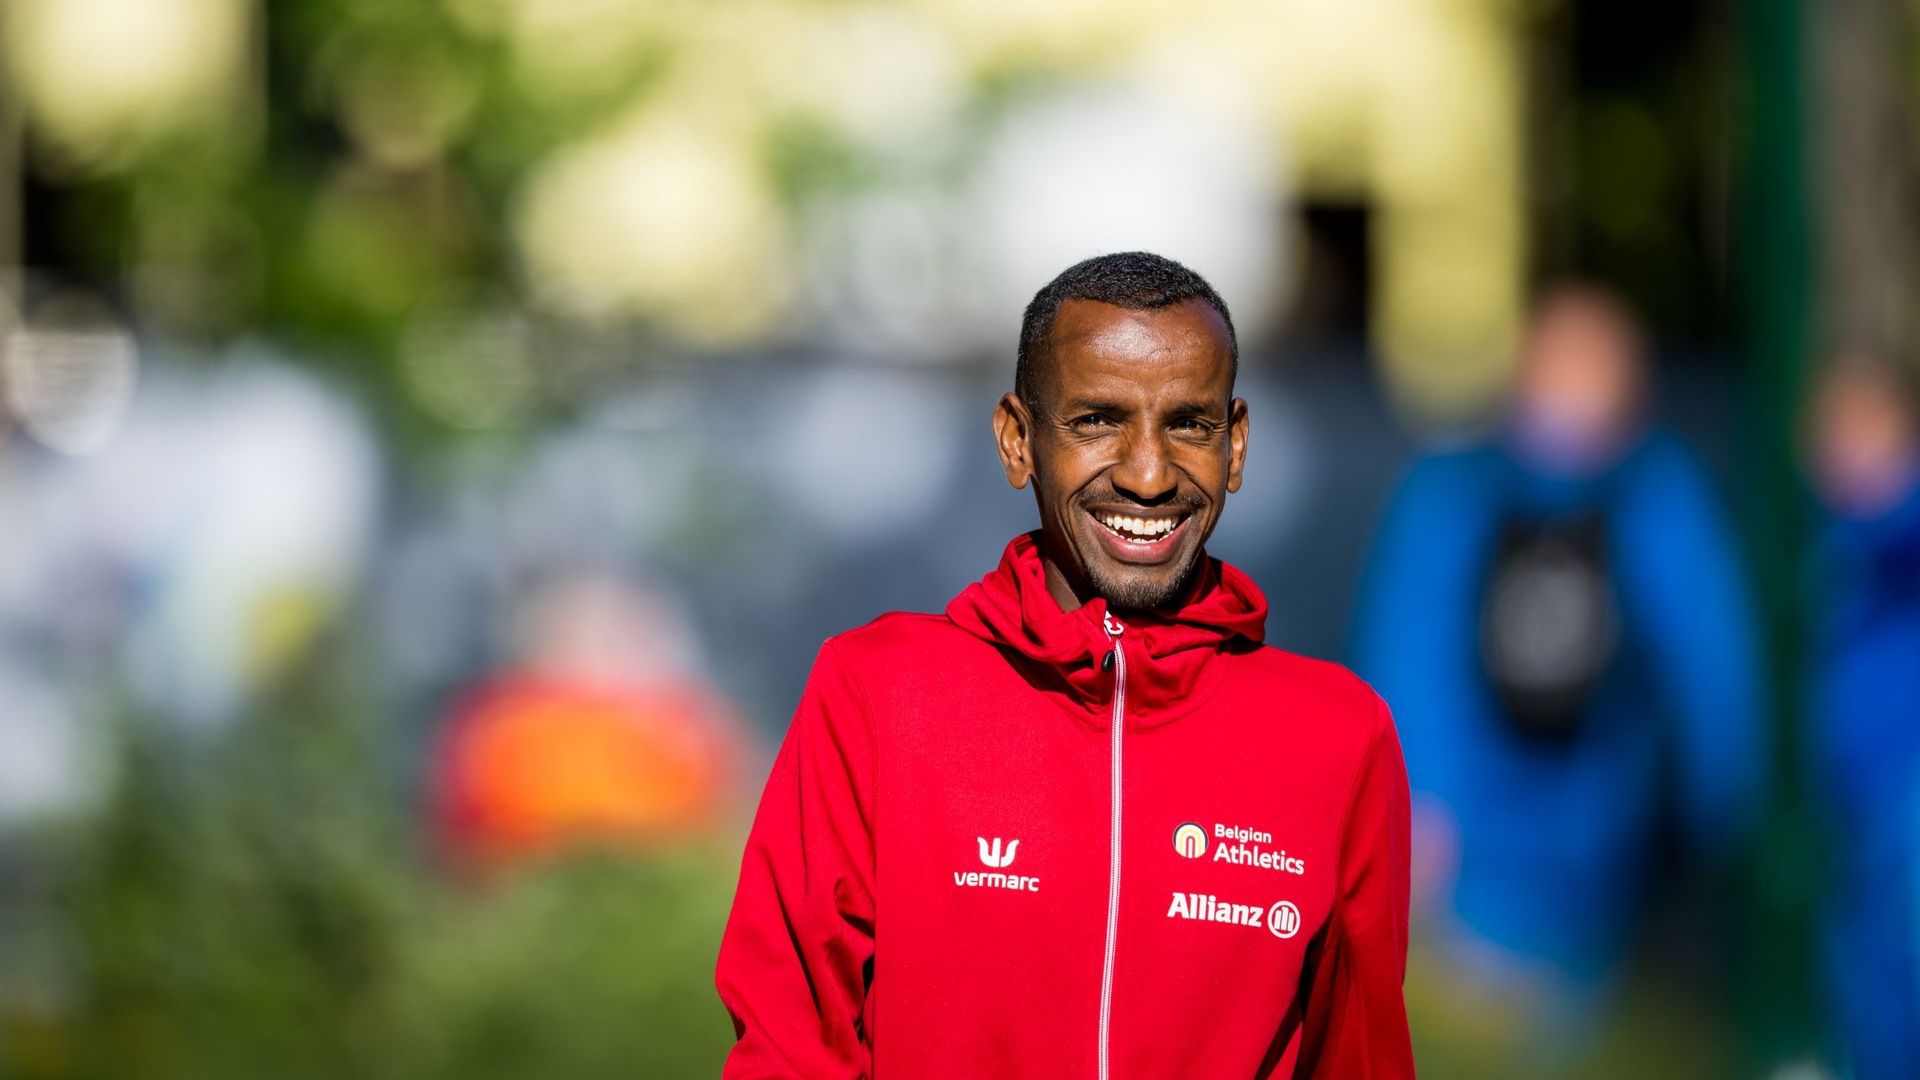 Bashir Abdi